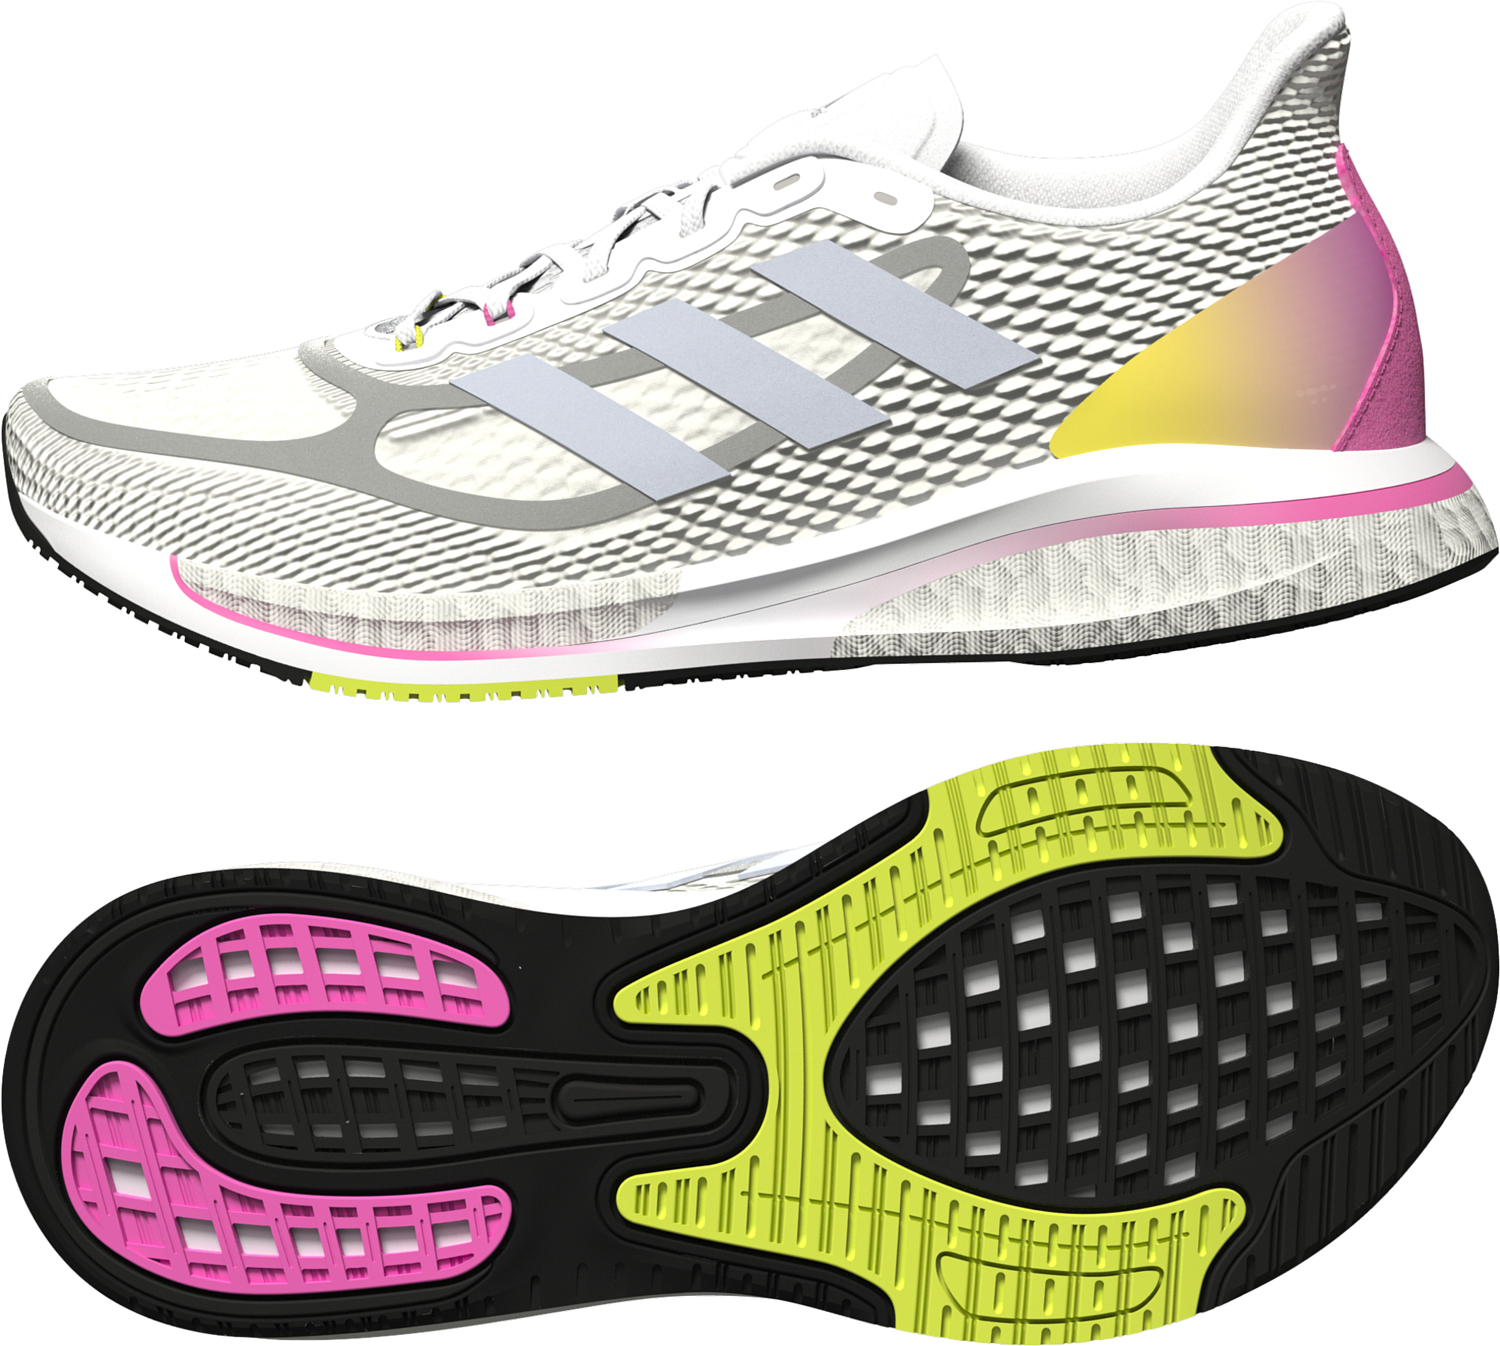 Беговые кроссовки Adidas Supernova + W Ftw White/Hal Silver/Screwaming Pink